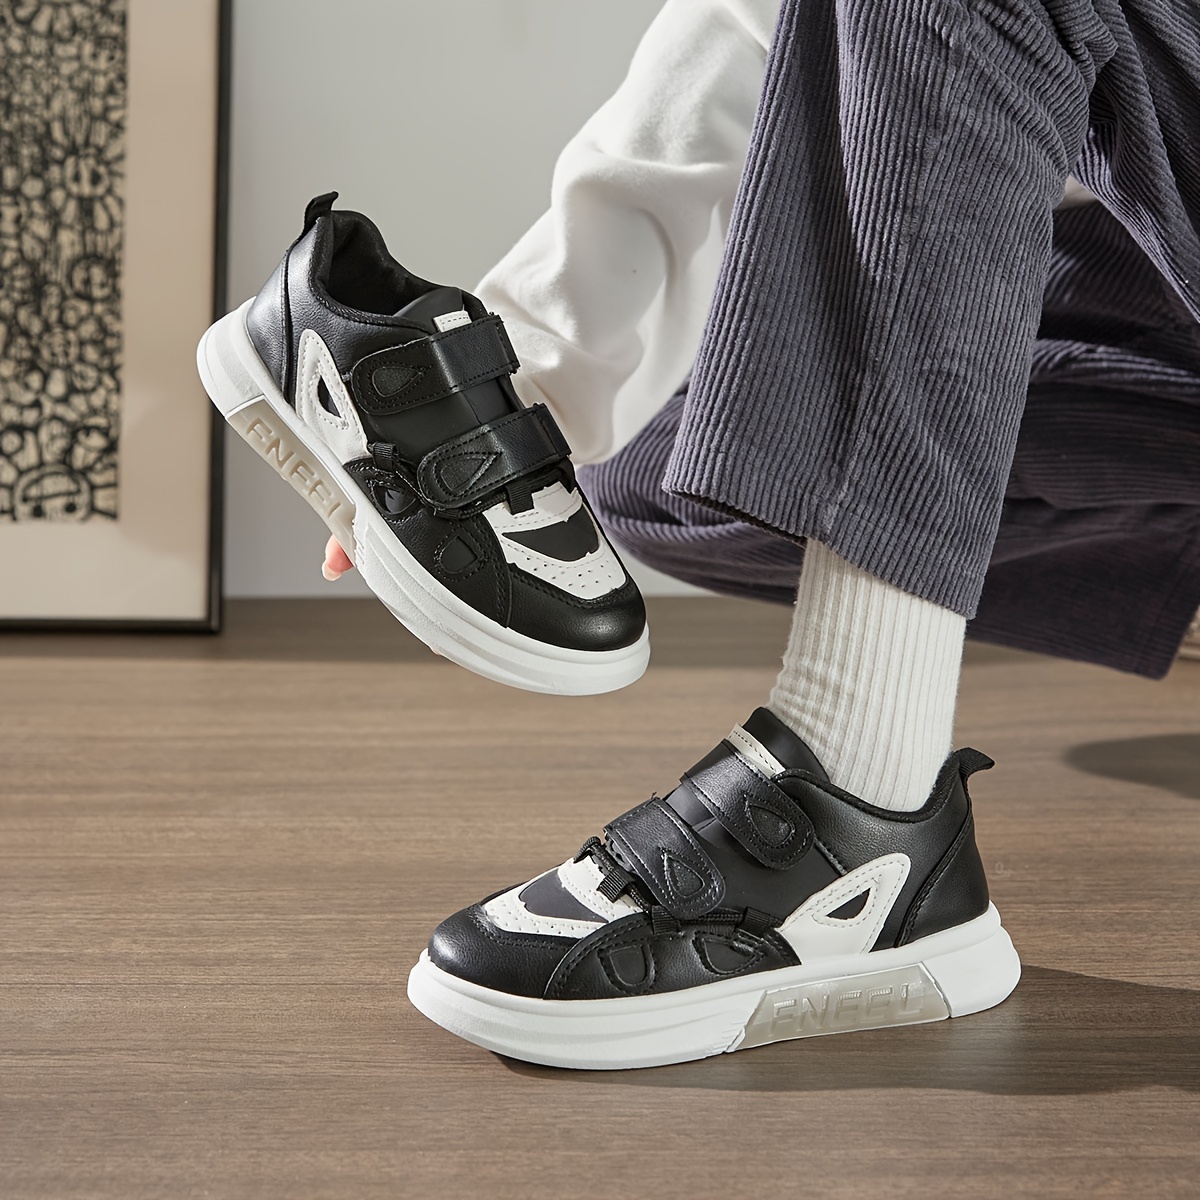 White velcro strap low cut slip on rocker bottom sneaker